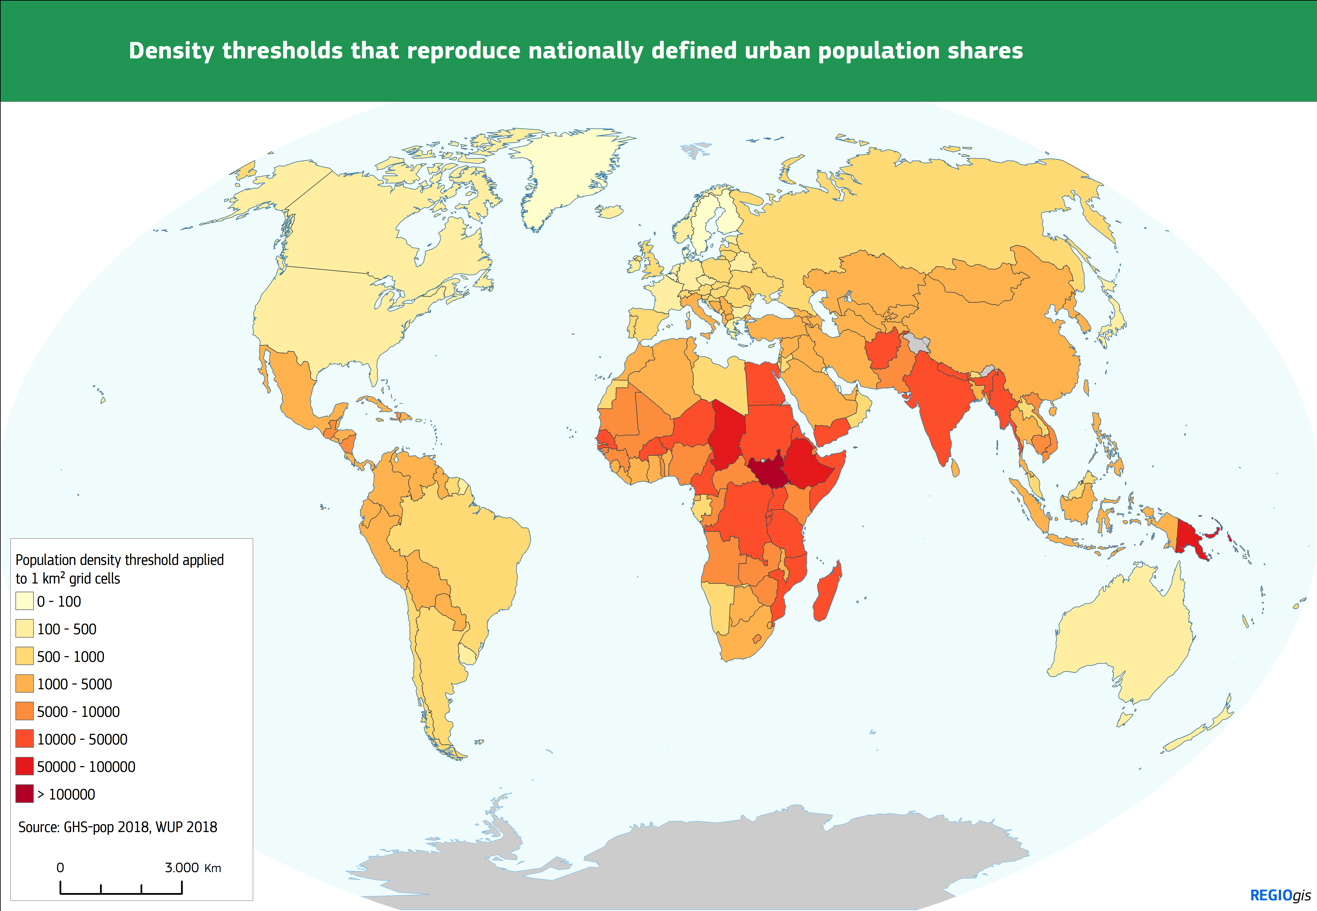 Population density thresholds that reproduce nationally defined urban population shares, 2015. Source: UN World Urbanization Prospects 2018.